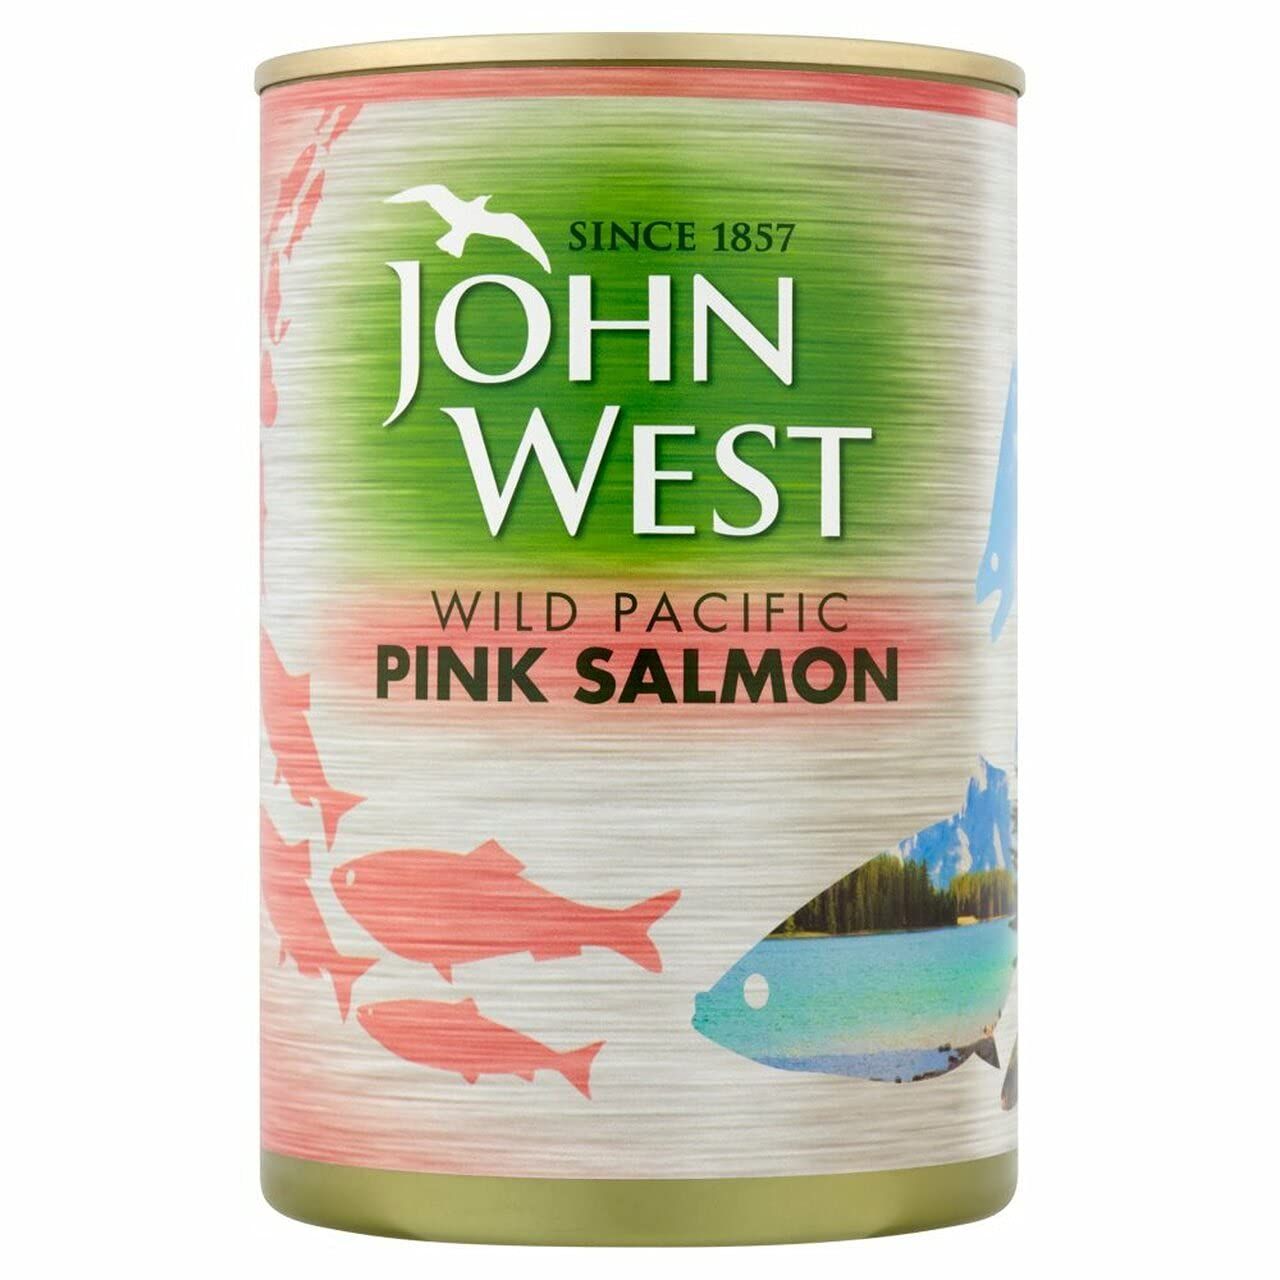 John West Wild Pacific Pink Salmon Image